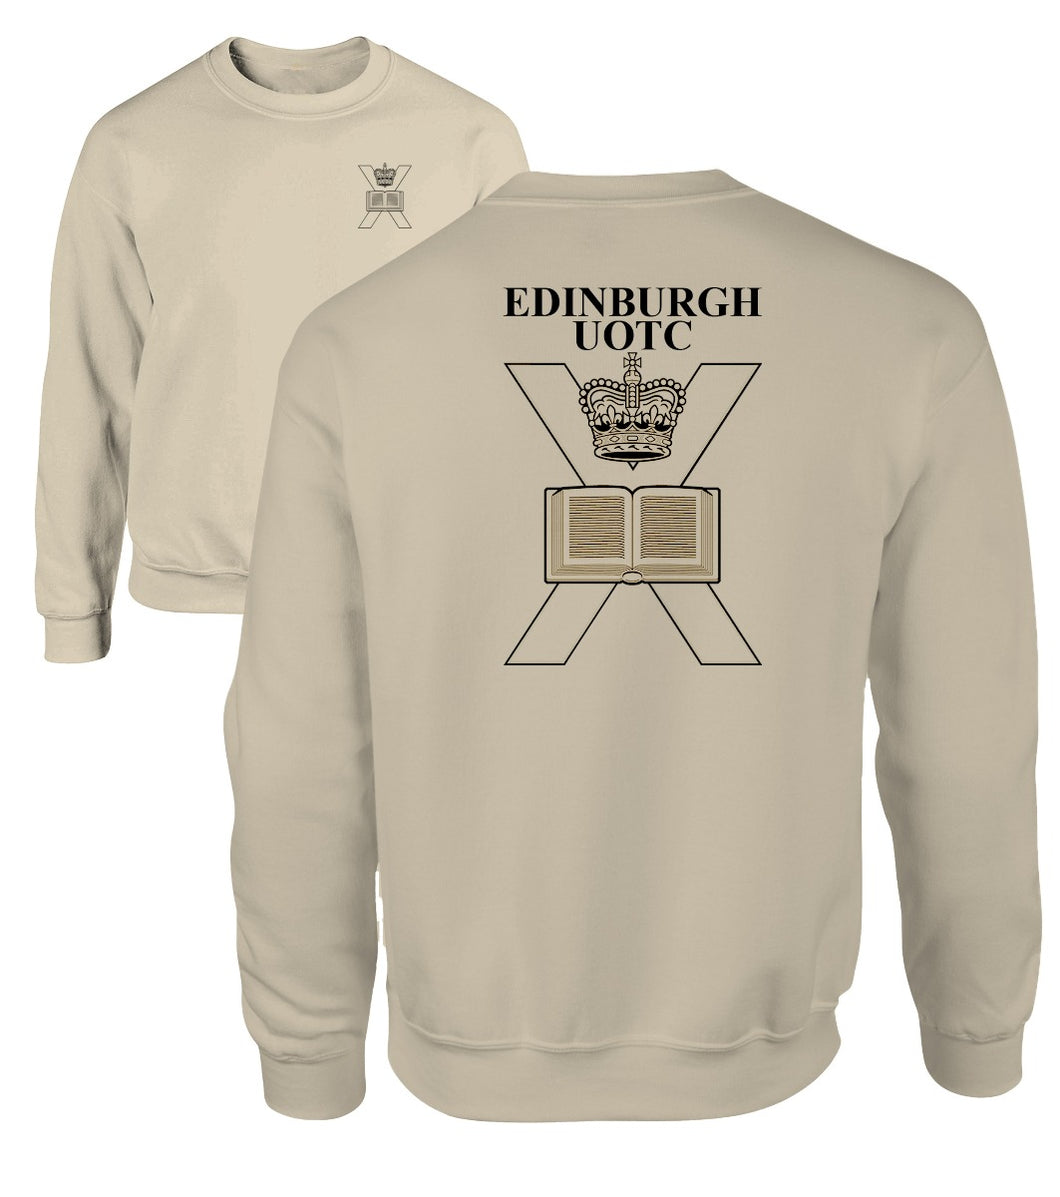 Double Printed Edinburgh (UOTC) Sweatshirt